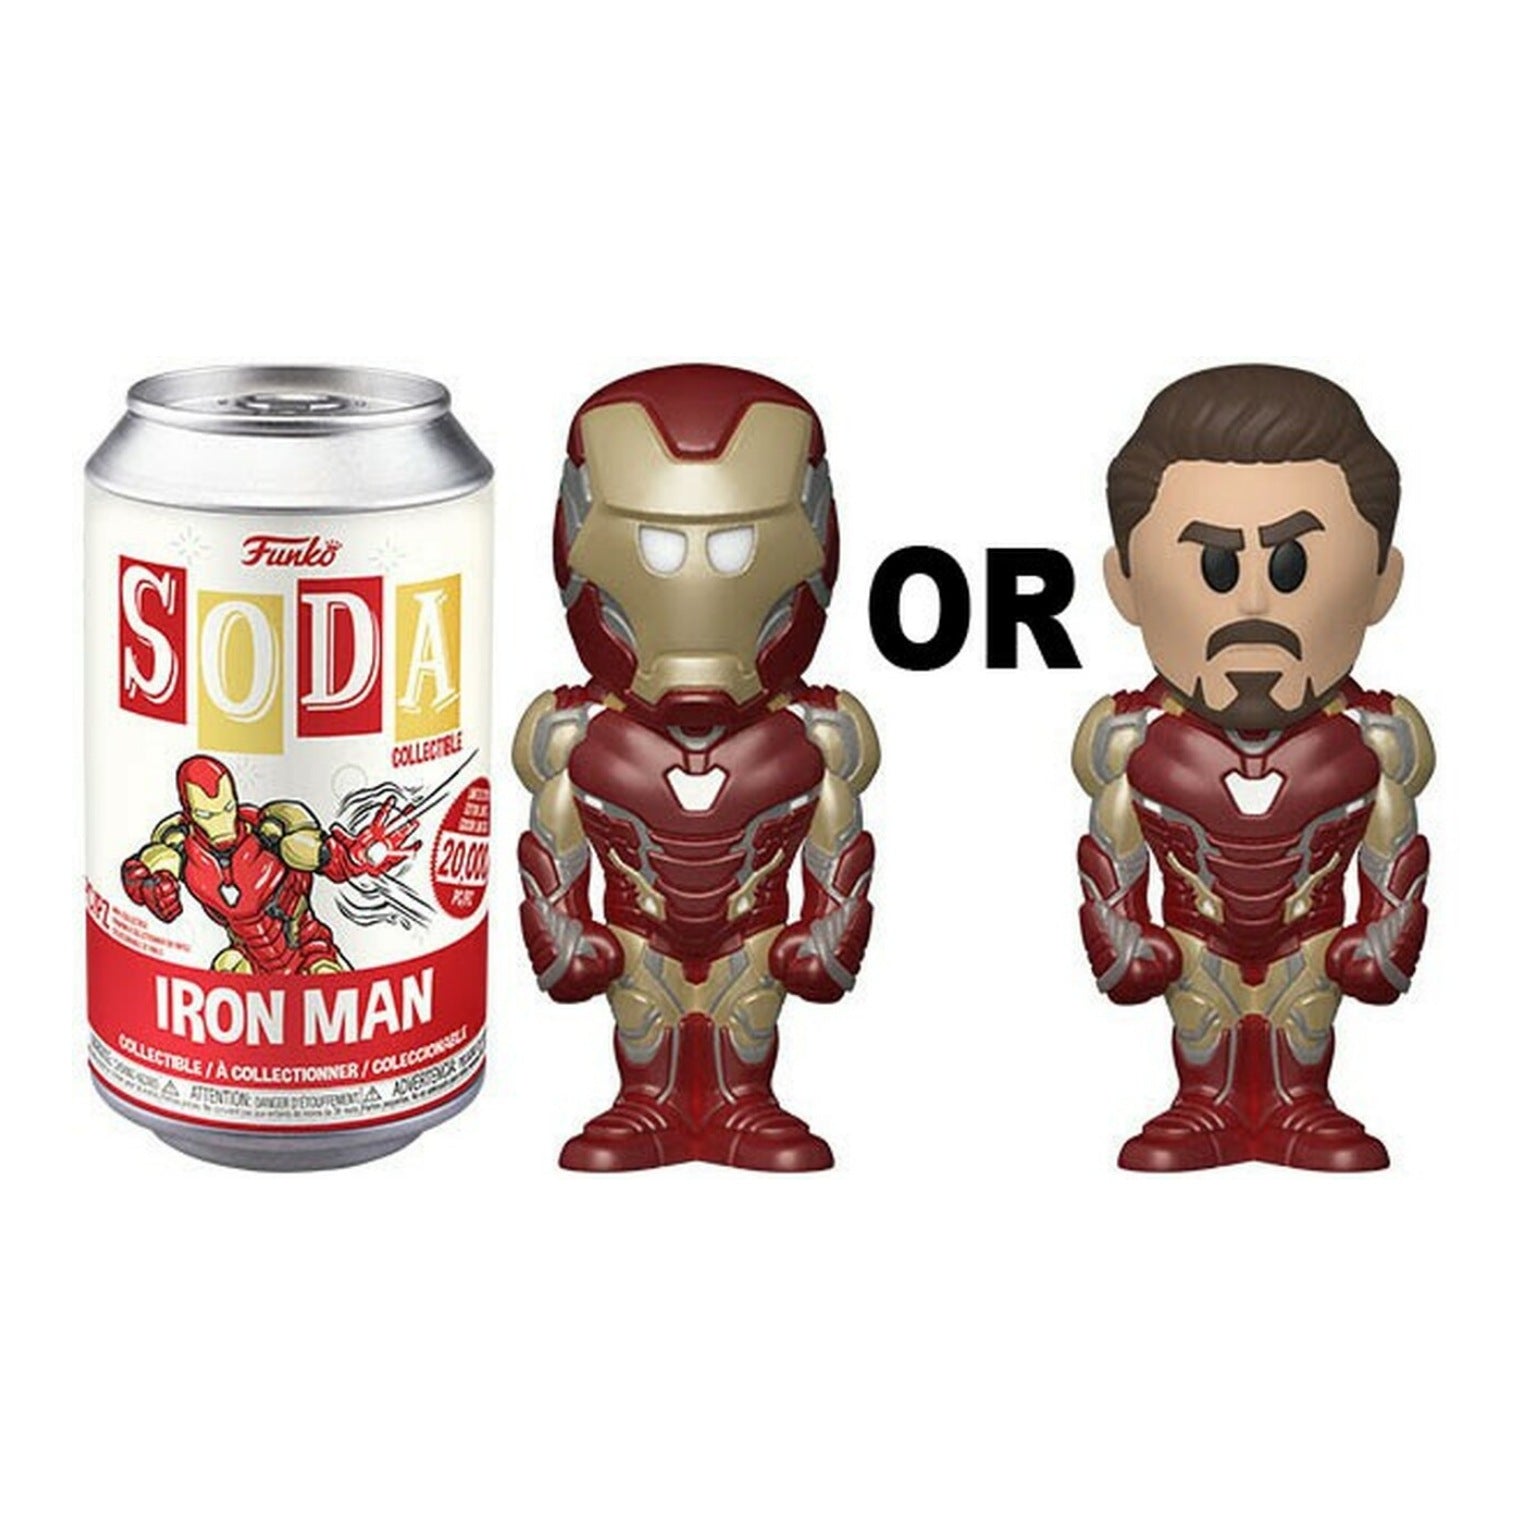 Iron Man Marvel Funko Soda Figure